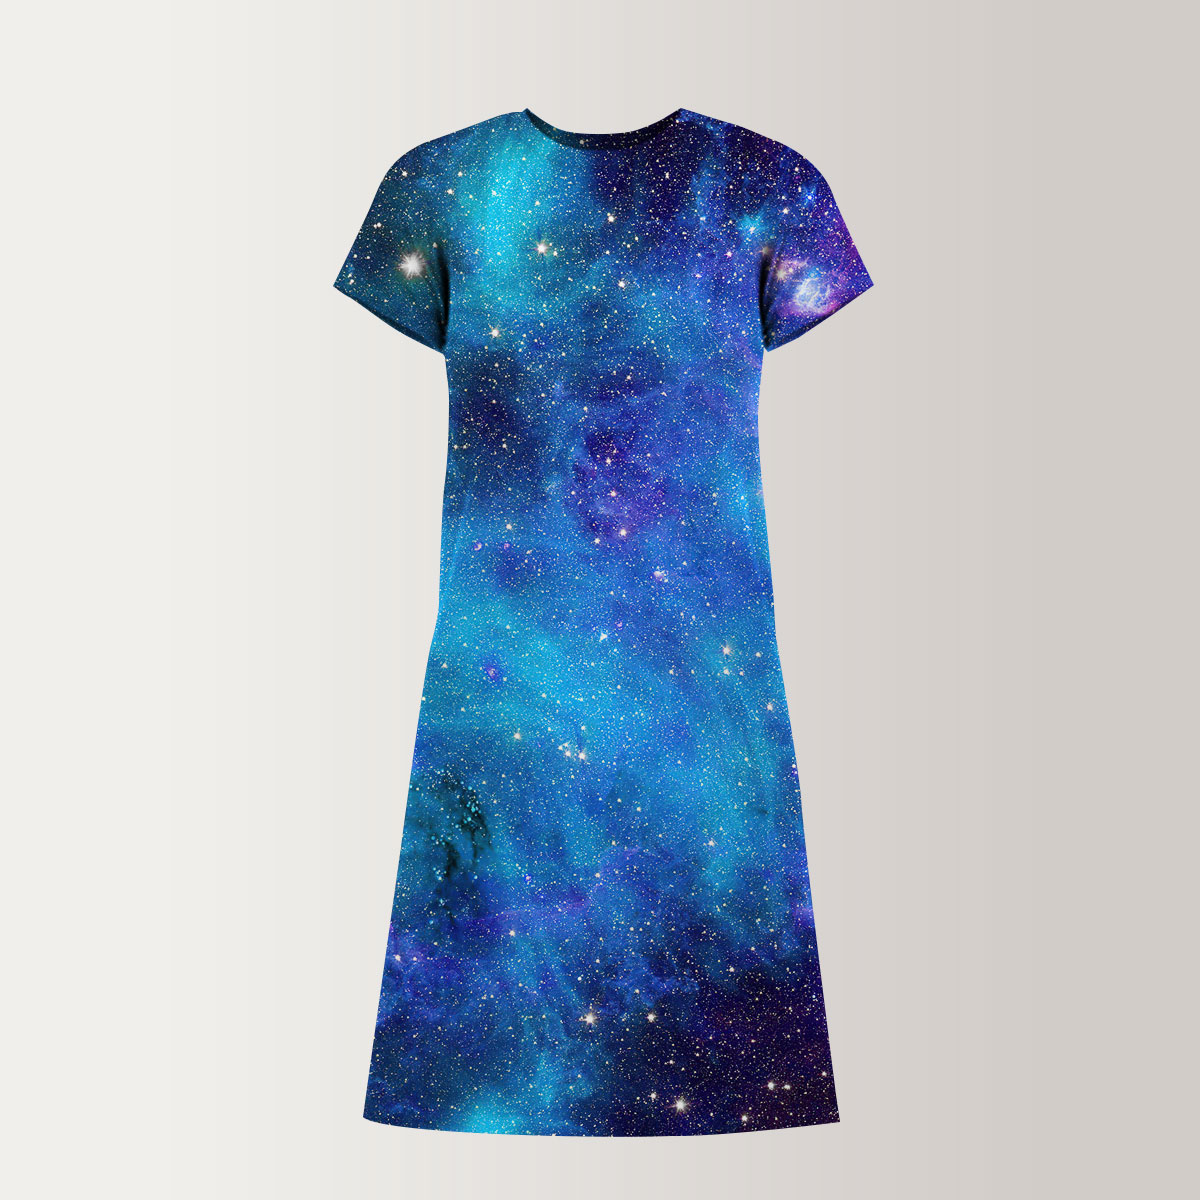 Aesthetic Galaxy T-Shirt Dress